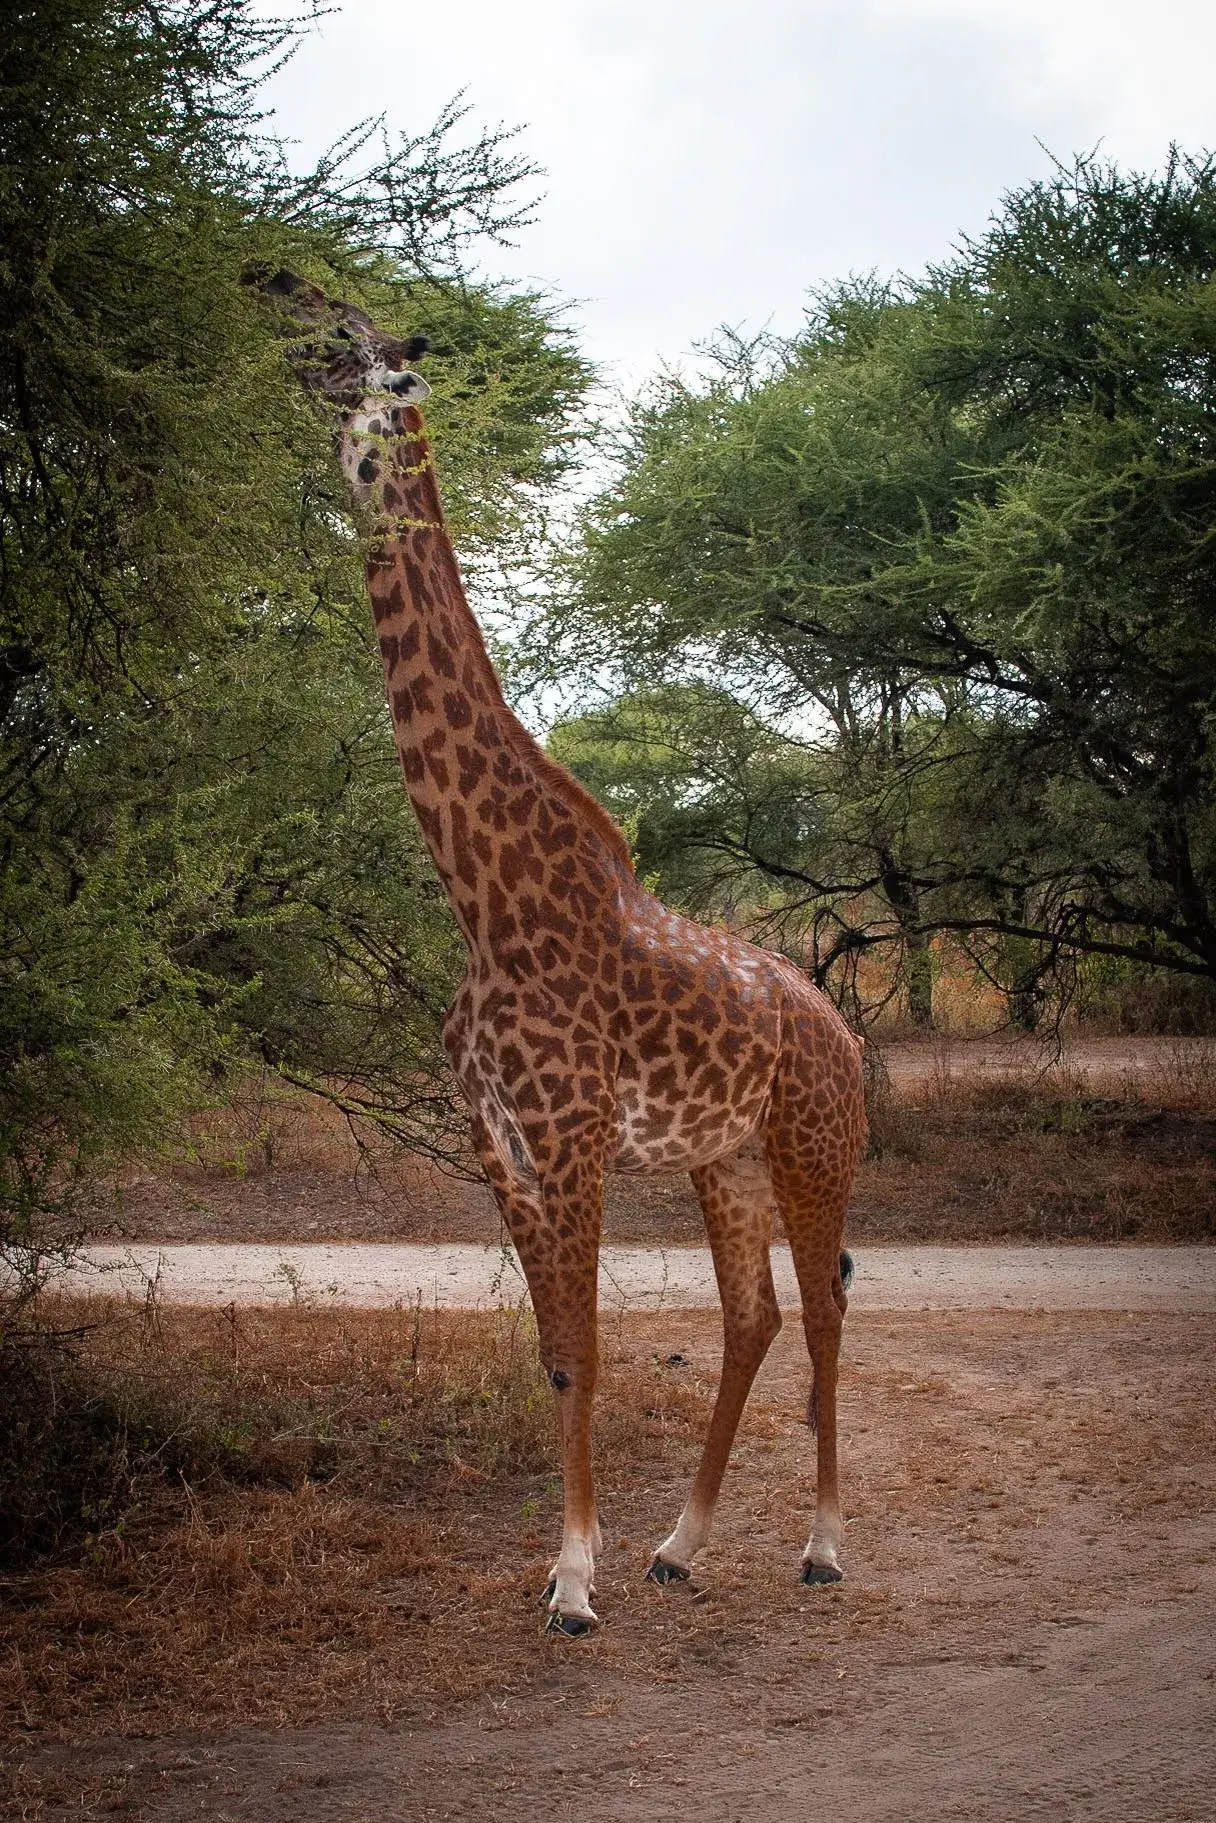 a giraffe spotted while eating in Tanzanian safari jungles